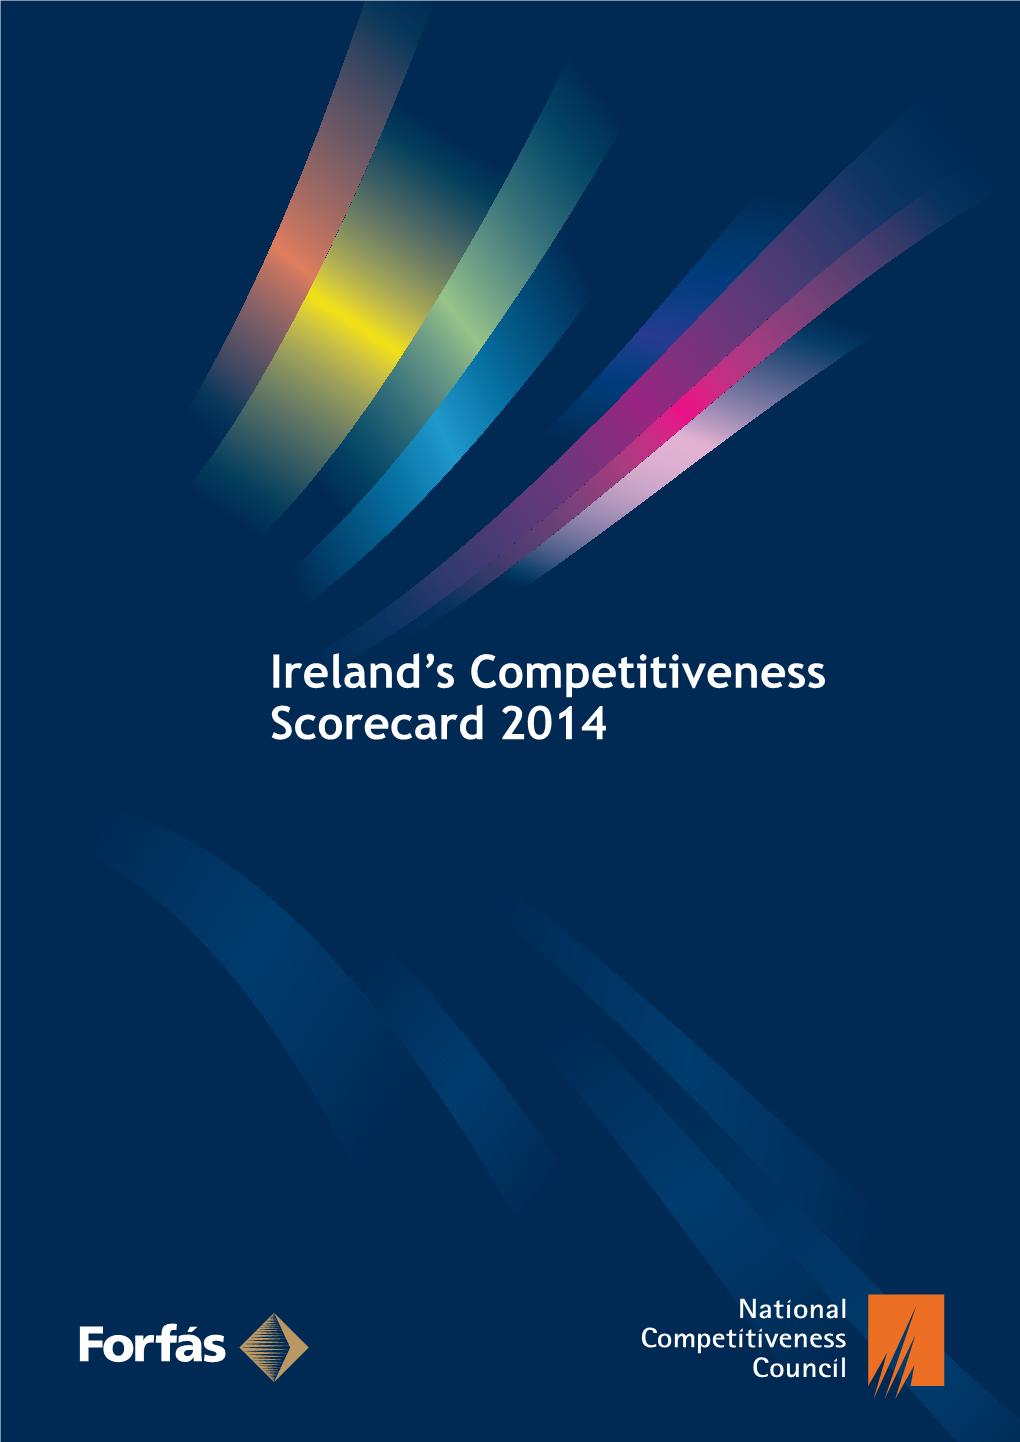 Ireland's Competitiveness Scorecard 2014